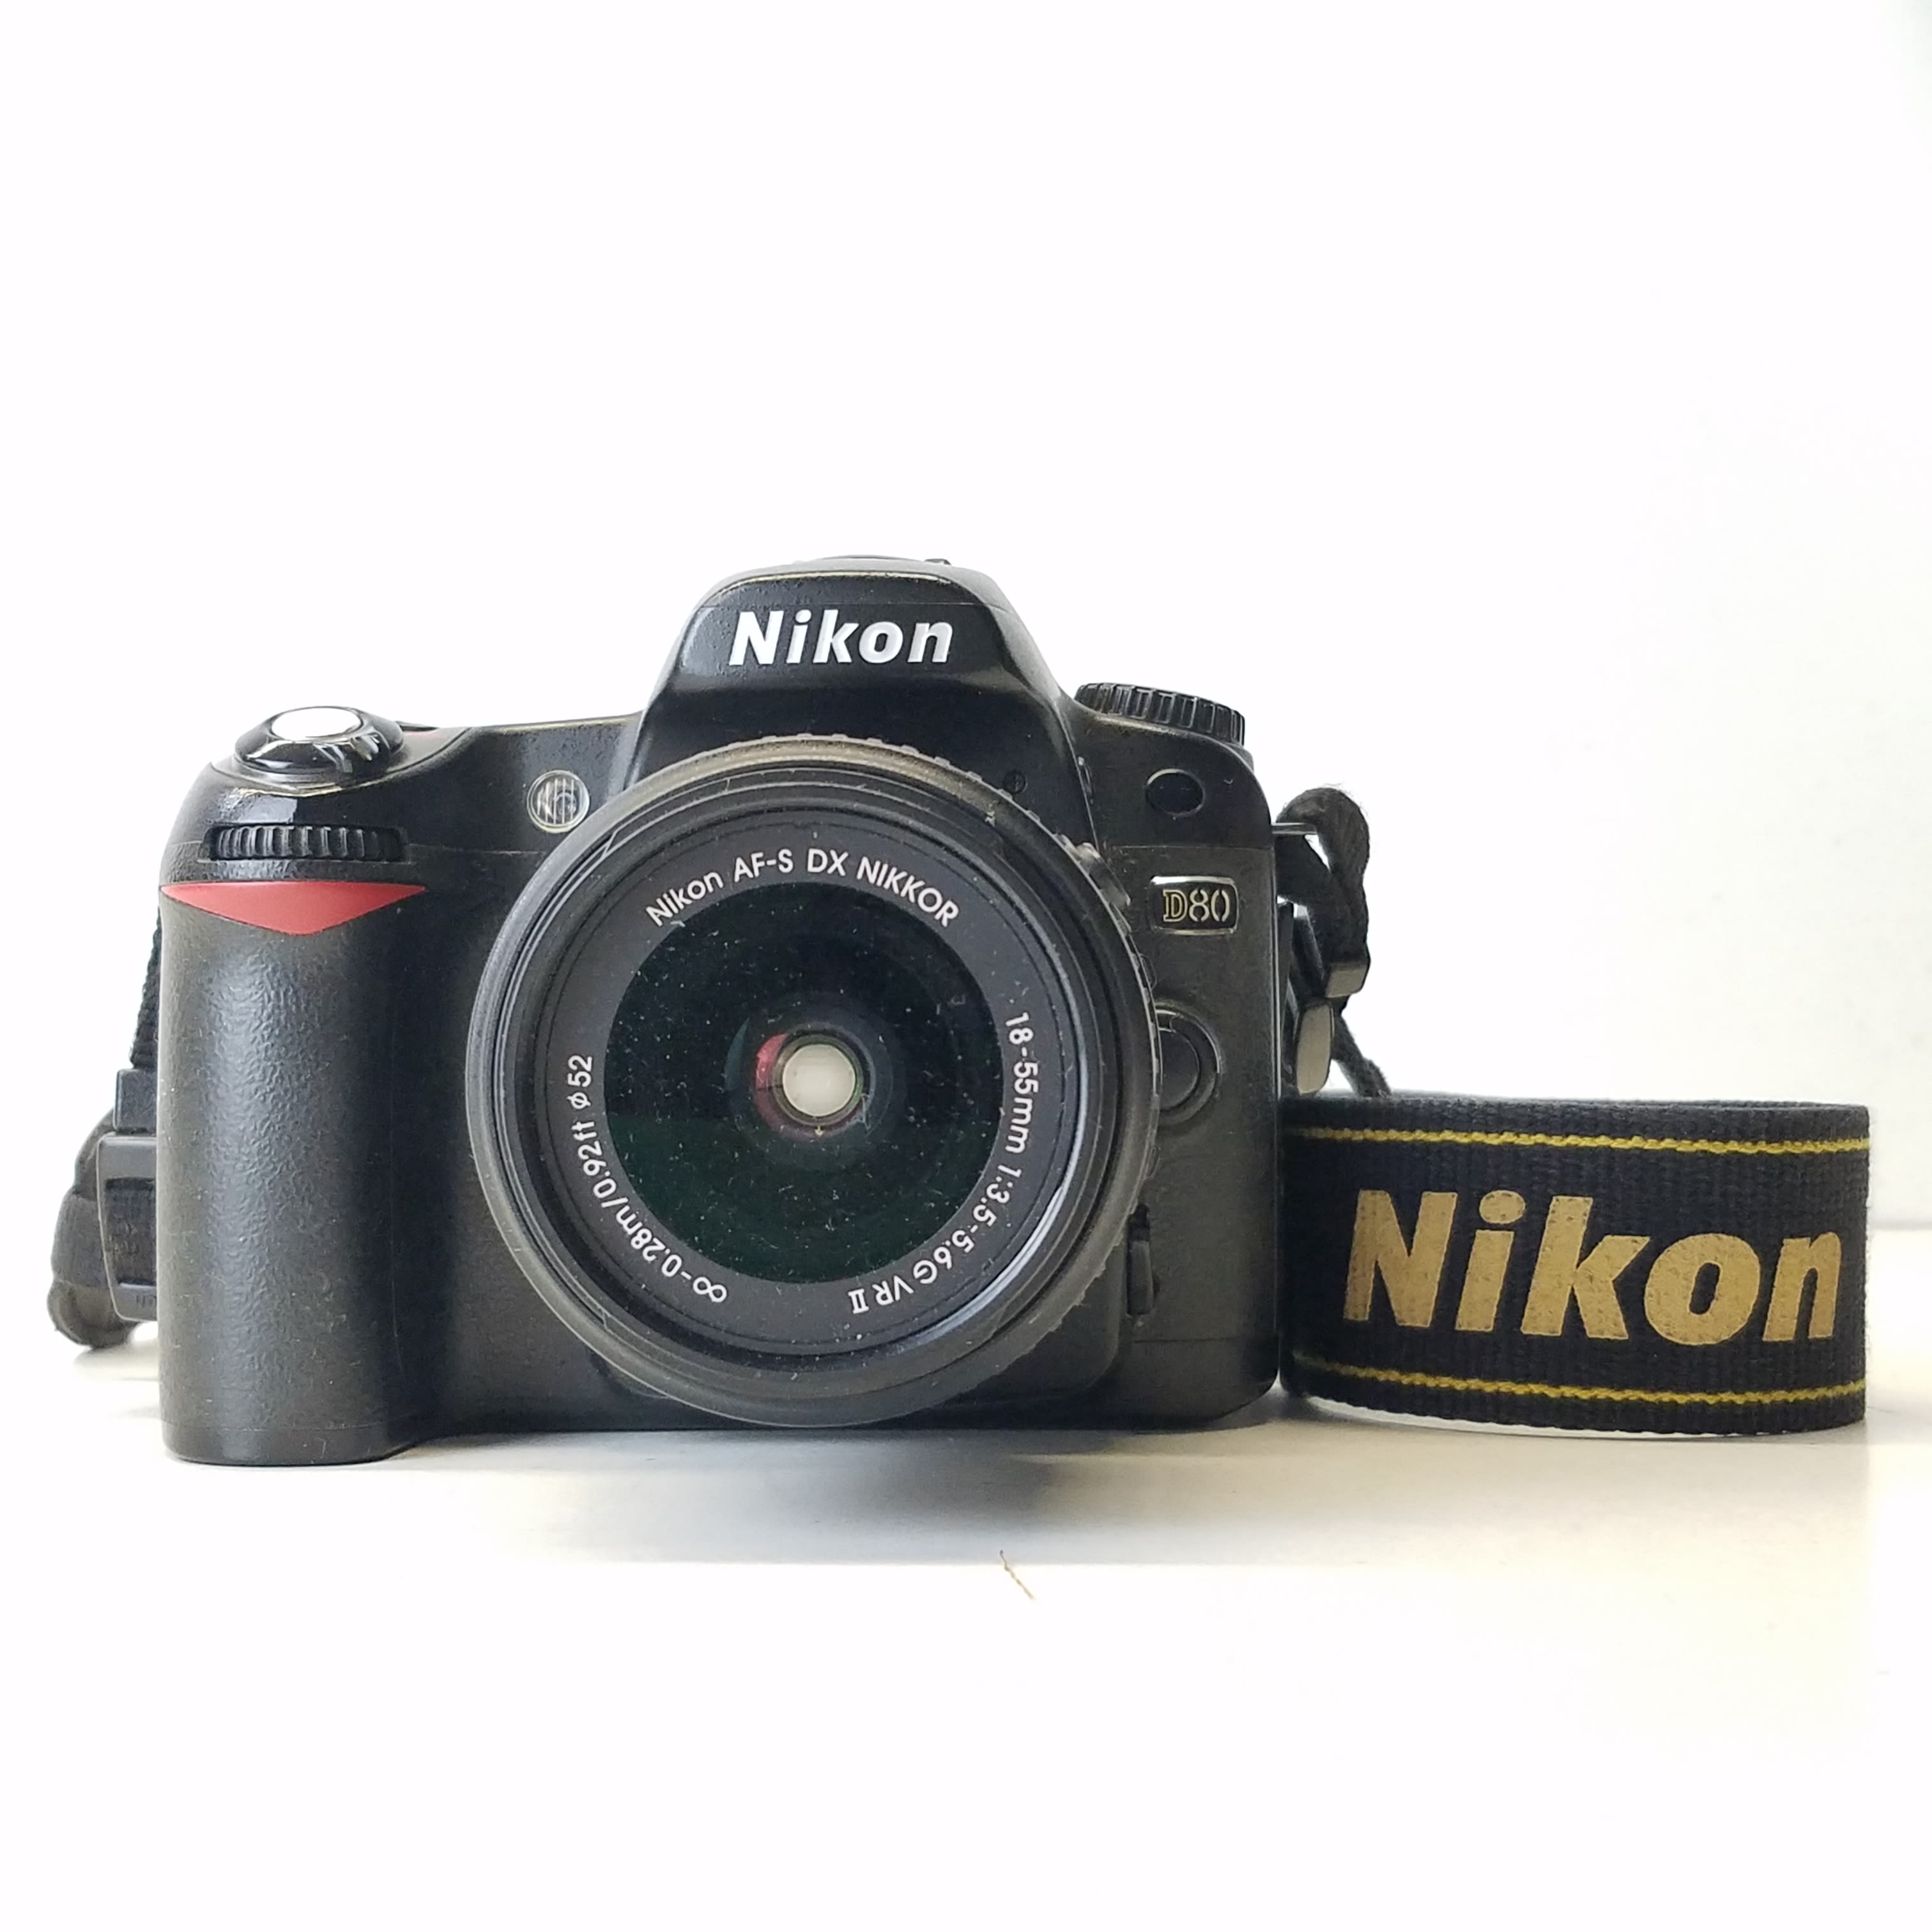 Buy the Nikon D80 10.2MP Digital SLR Camera with 18-55mm Lens For